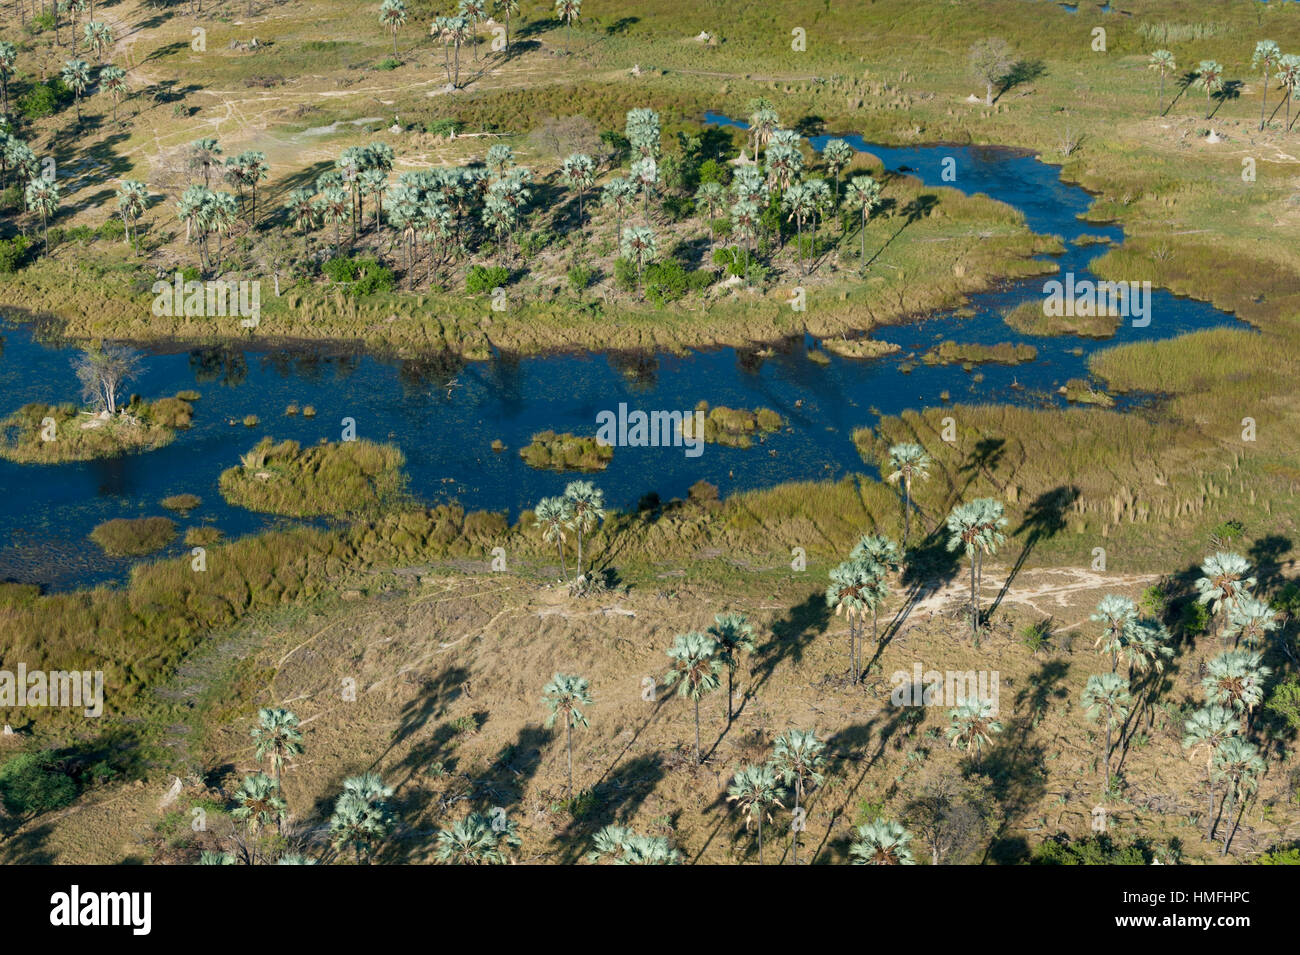 Aerial view of the Okavango Delta, Botswana Stock Photo